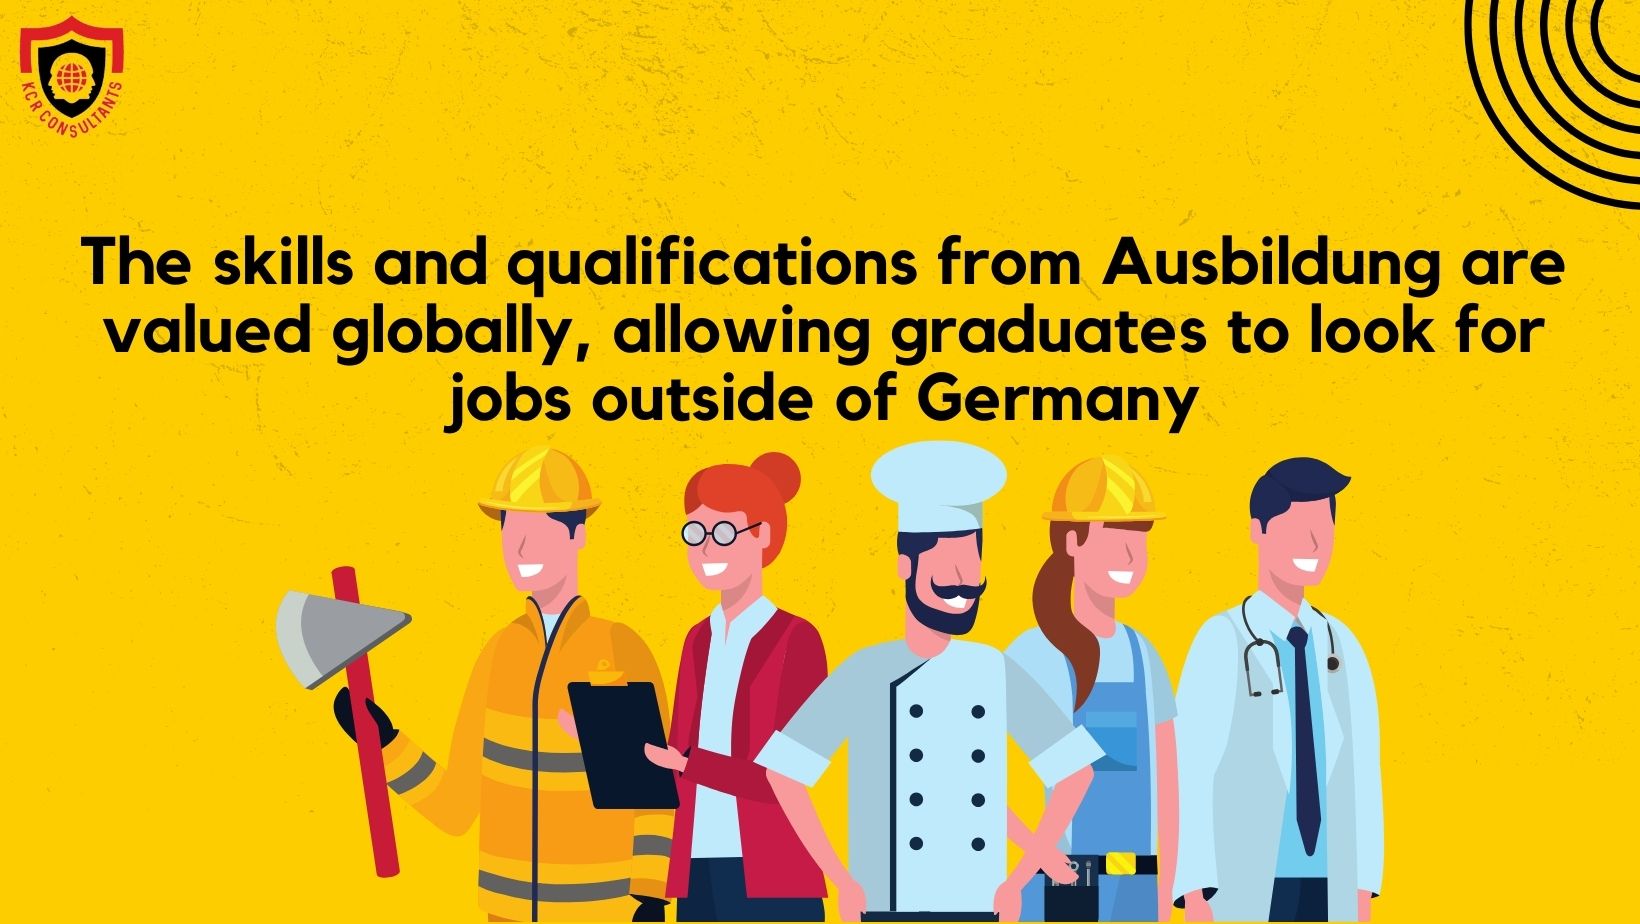 AUSBILDUNG COURSES IN GERMANY - KCR CONSULTANTS - International job opportunity for Ausbildung graduates